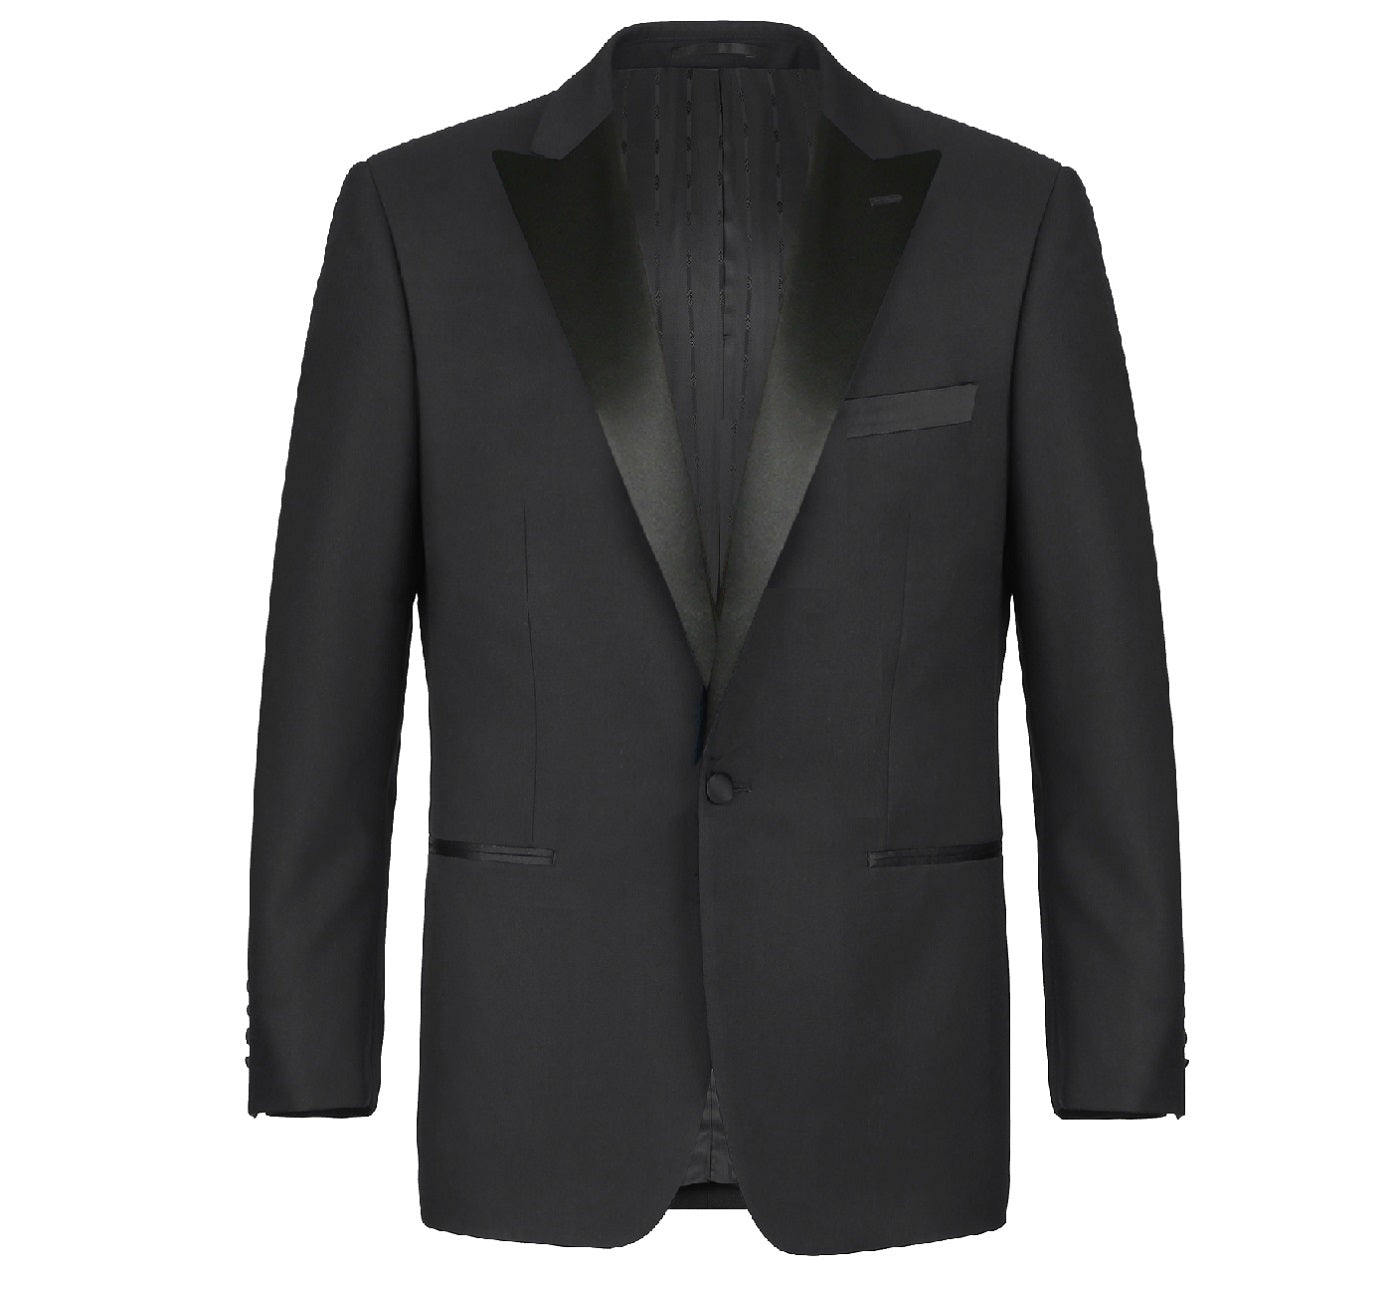 Men's Tuxedo Peak Lapel Dress Suit